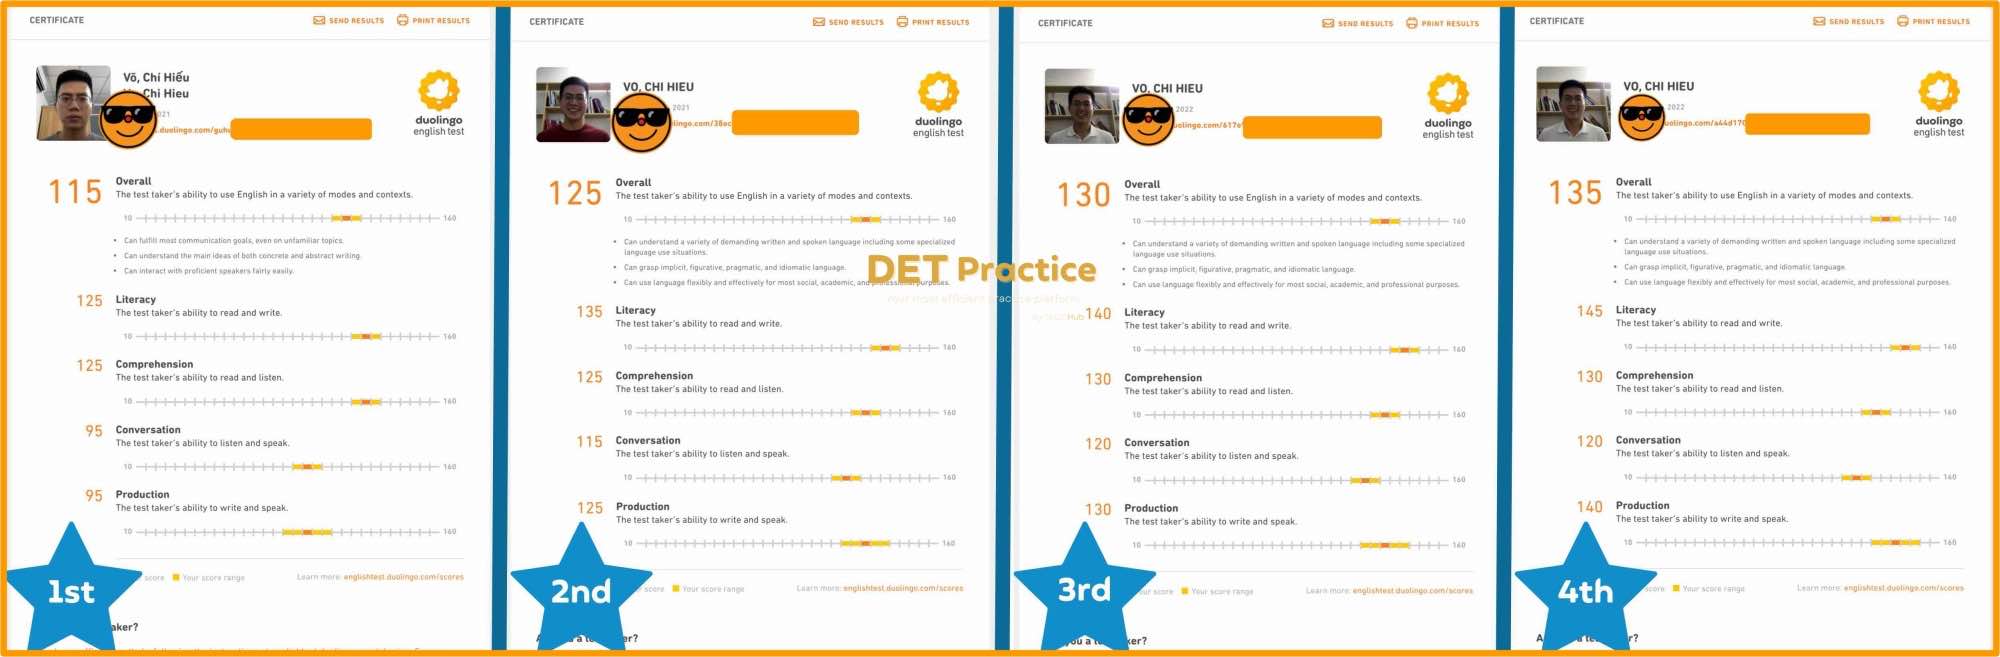 duolingo high production scores, det practice platform, det practice, Duolingo Test preparation, duolingo sub scores